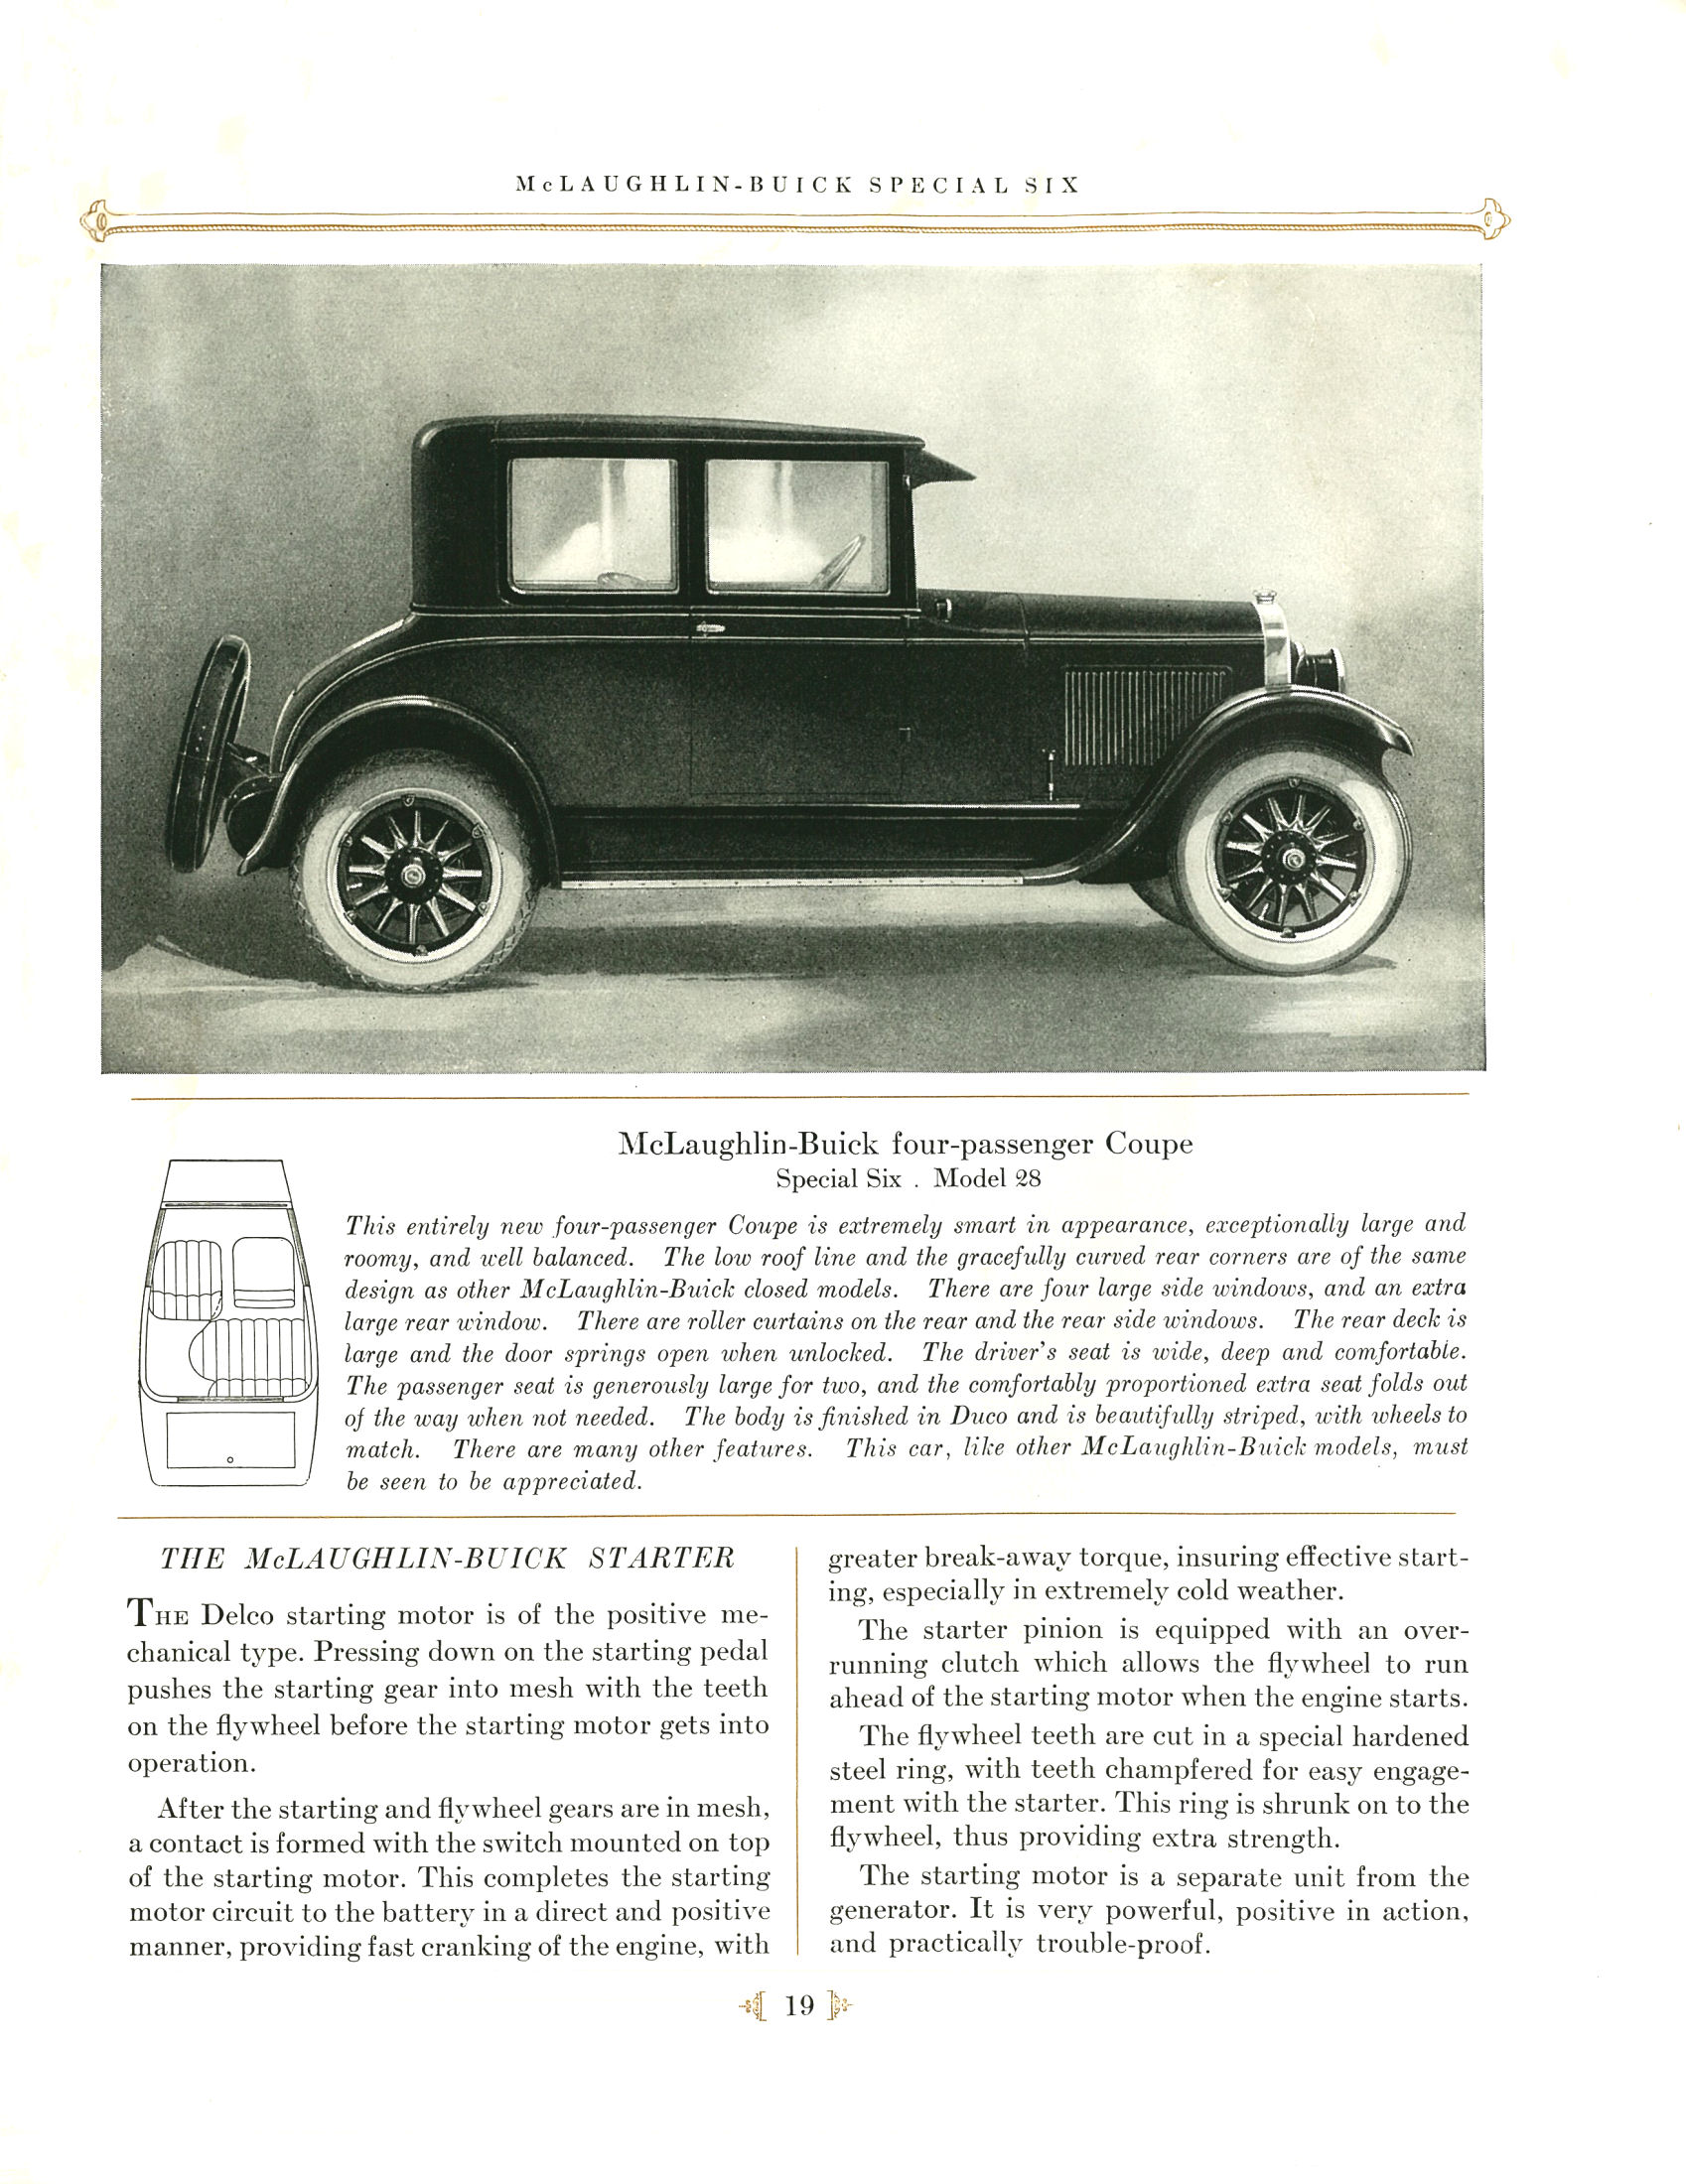 1925 McLaughlin Buick Booklet-19